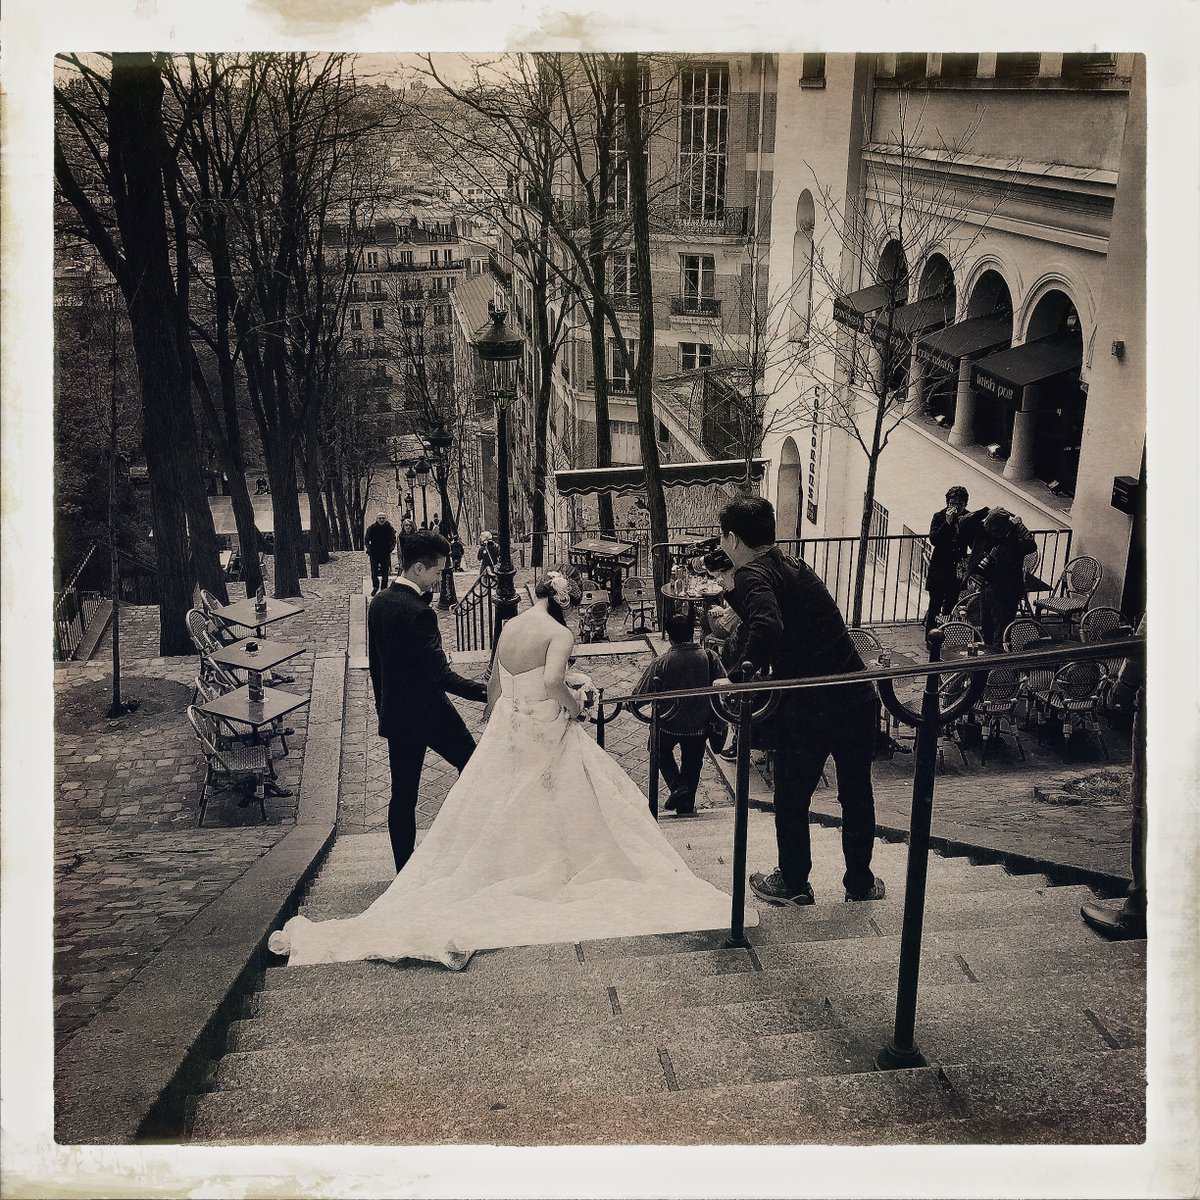 One for the wedding album: Montmartre steps, Paris. #streetphotography  #DreamingOfTravel